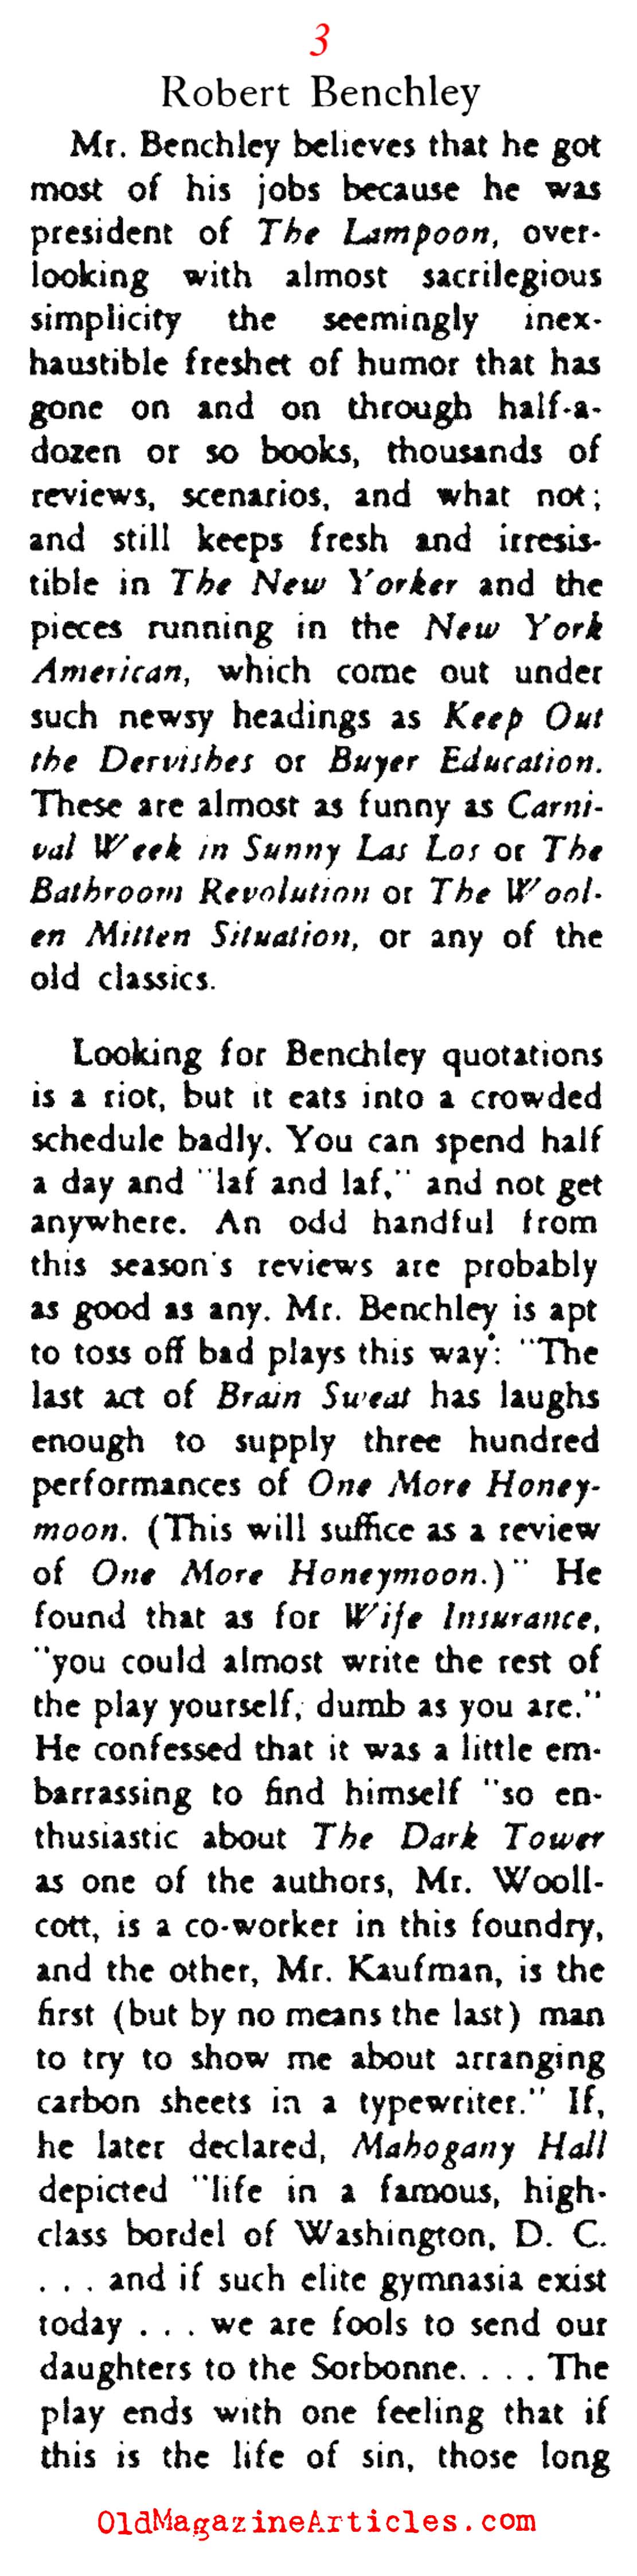  Robert Benchley, Humorist (Stage Magazine, 1934)